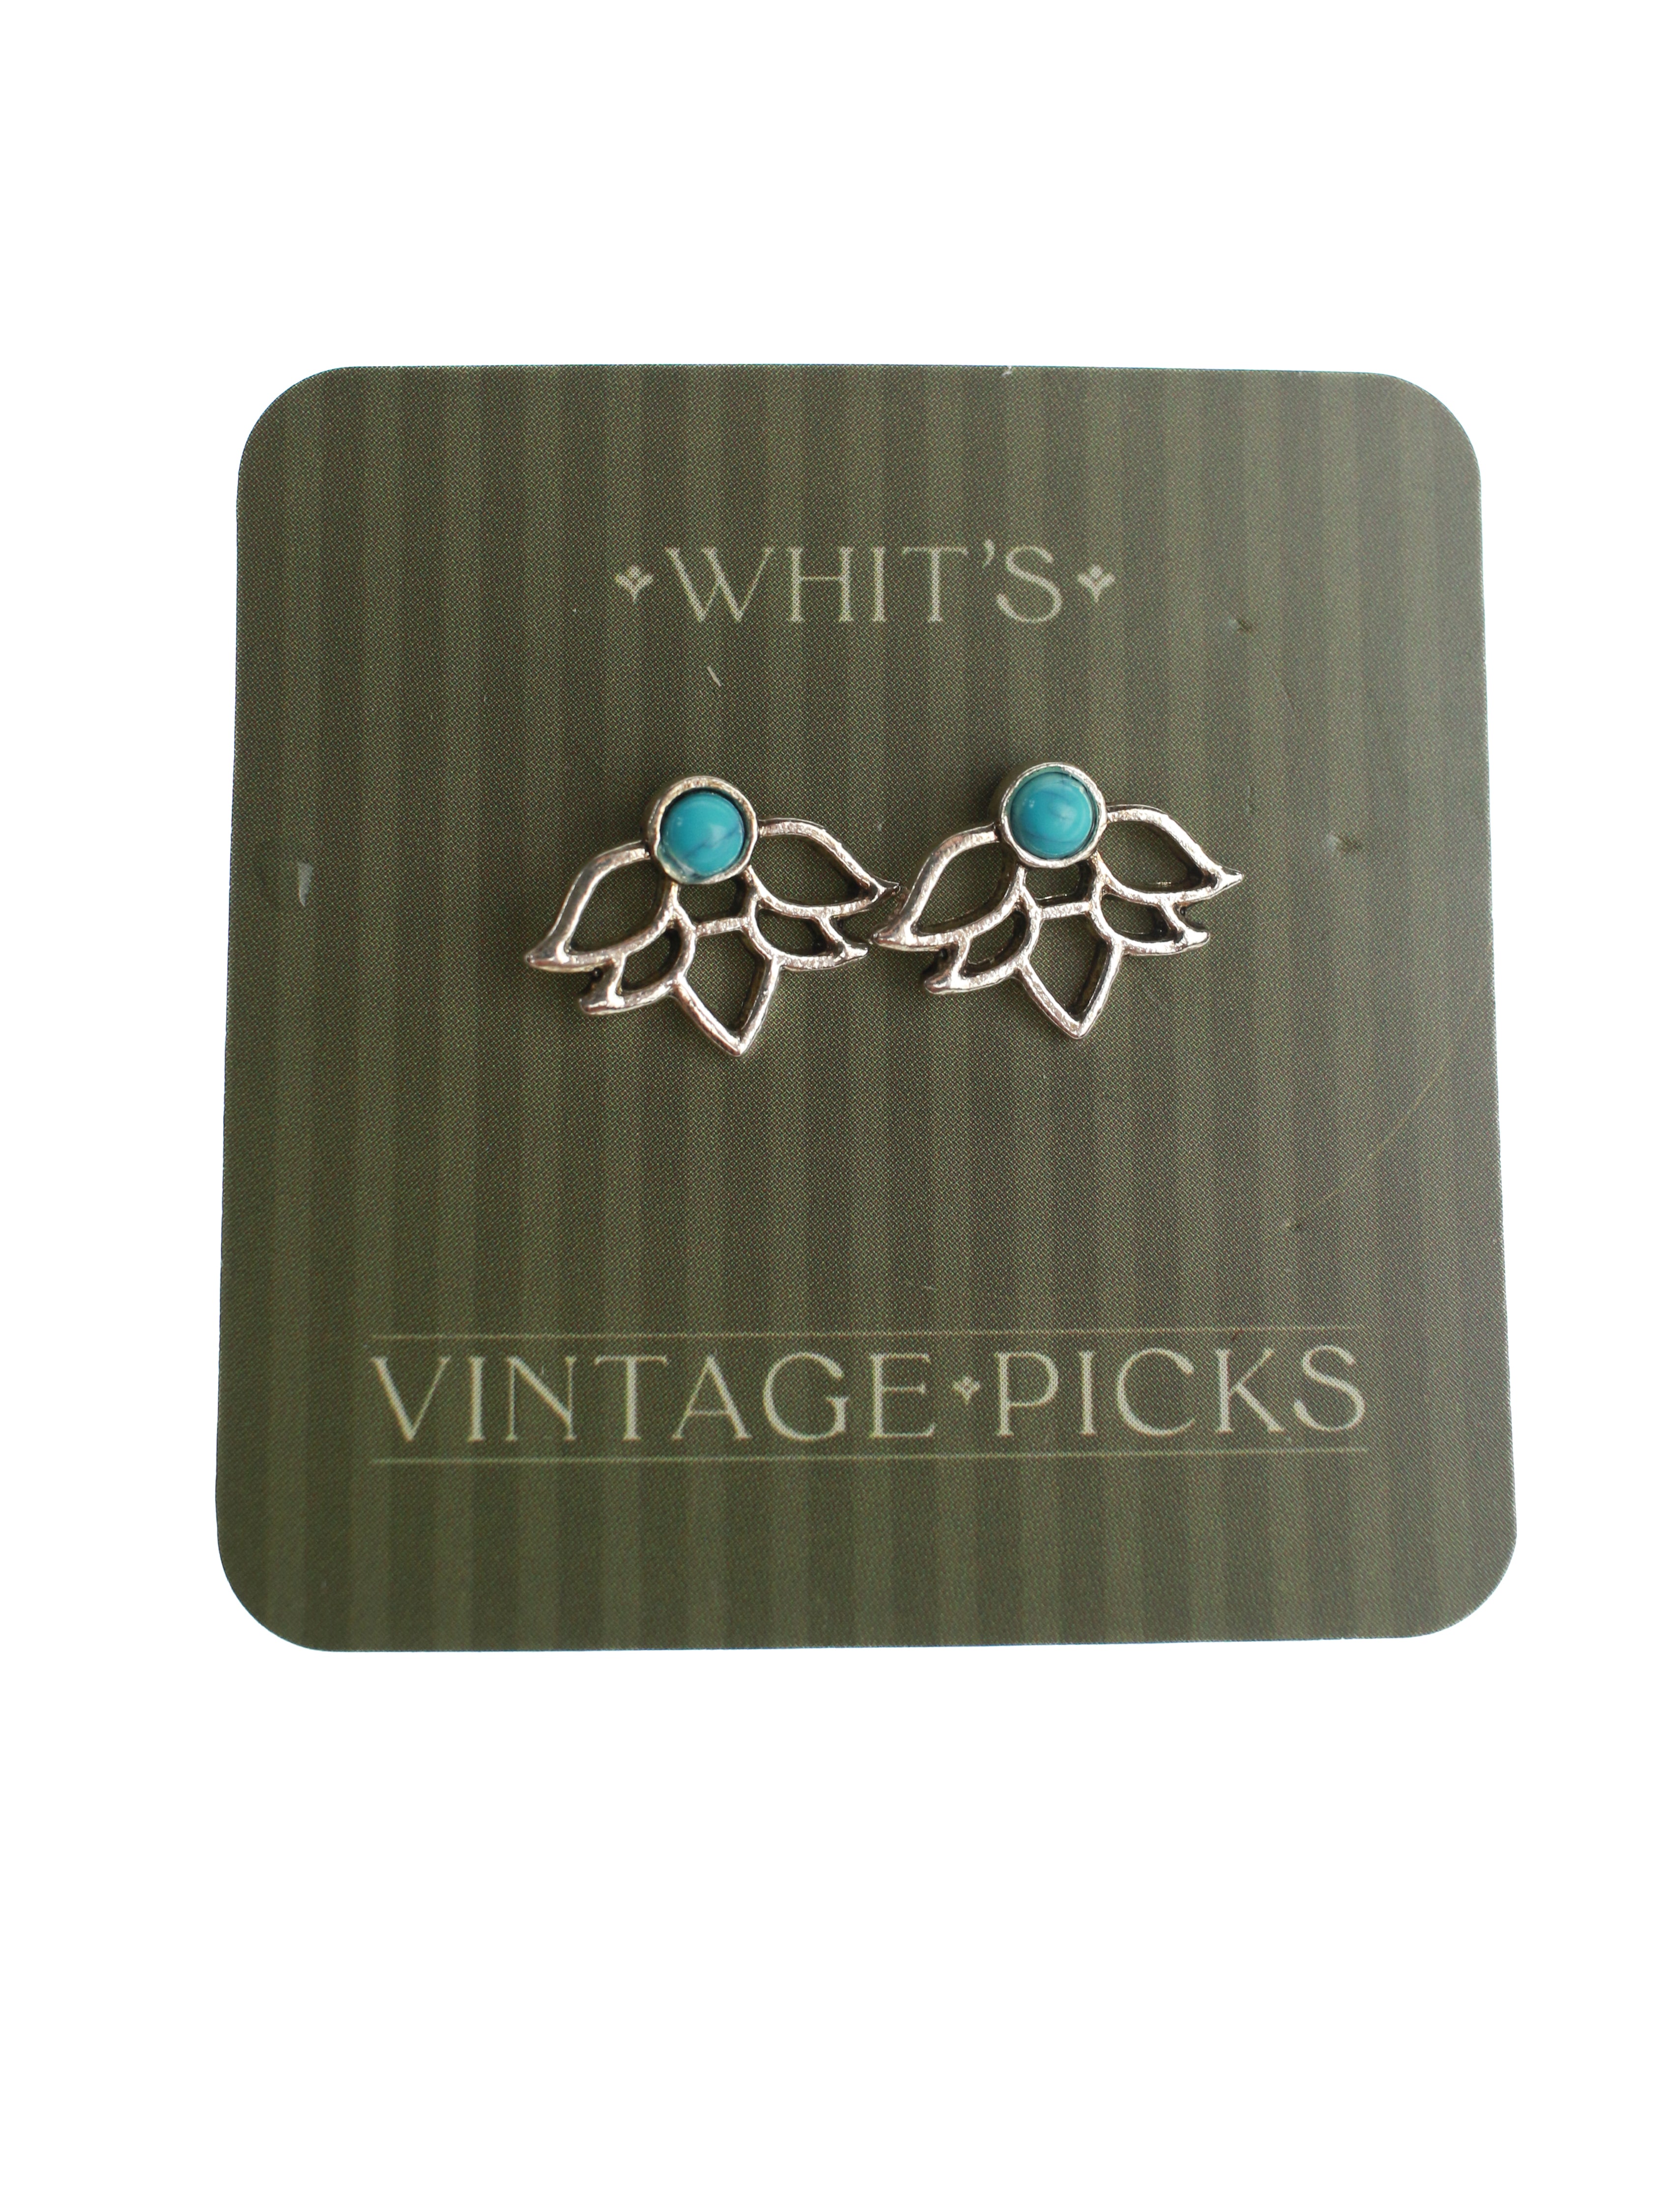 Whit's Vintage Picks- Earrings 196